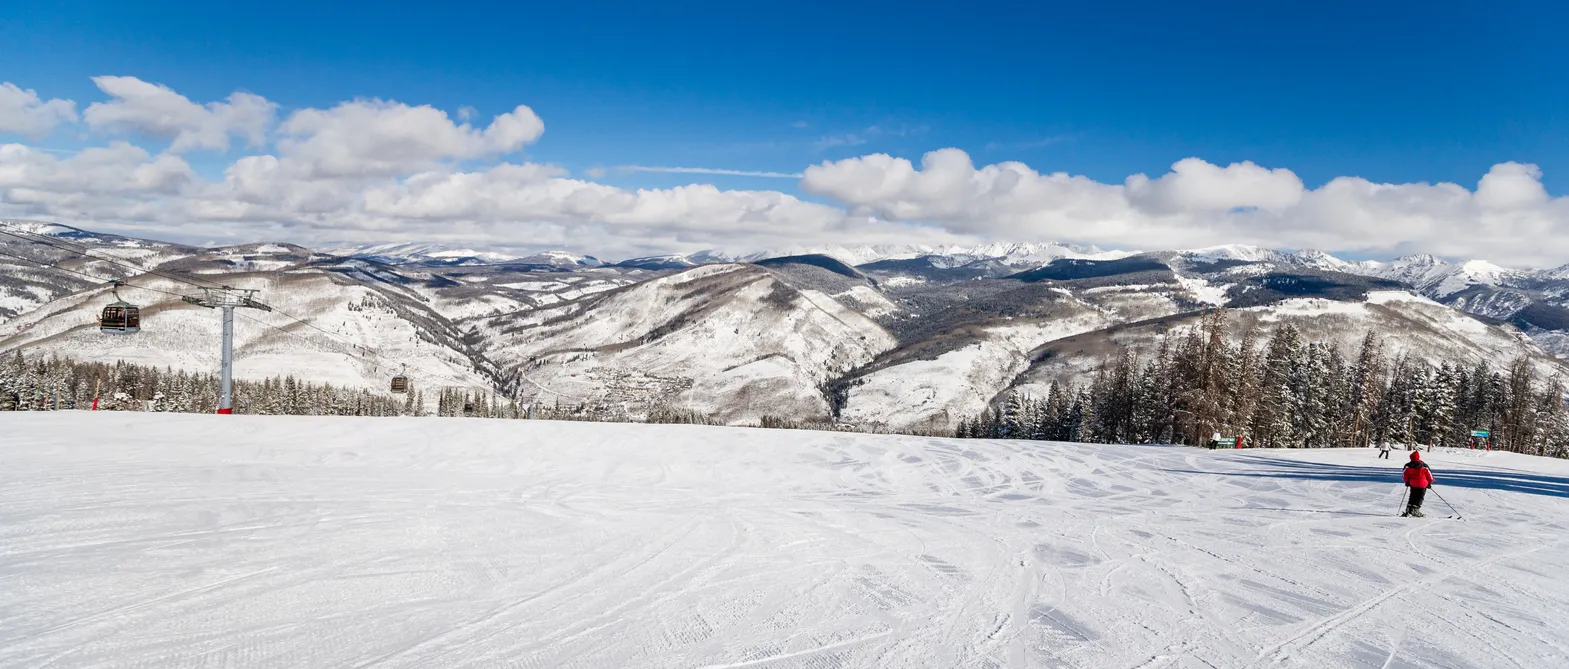  La station de ski de Vail au Colorado © iStock / miralex